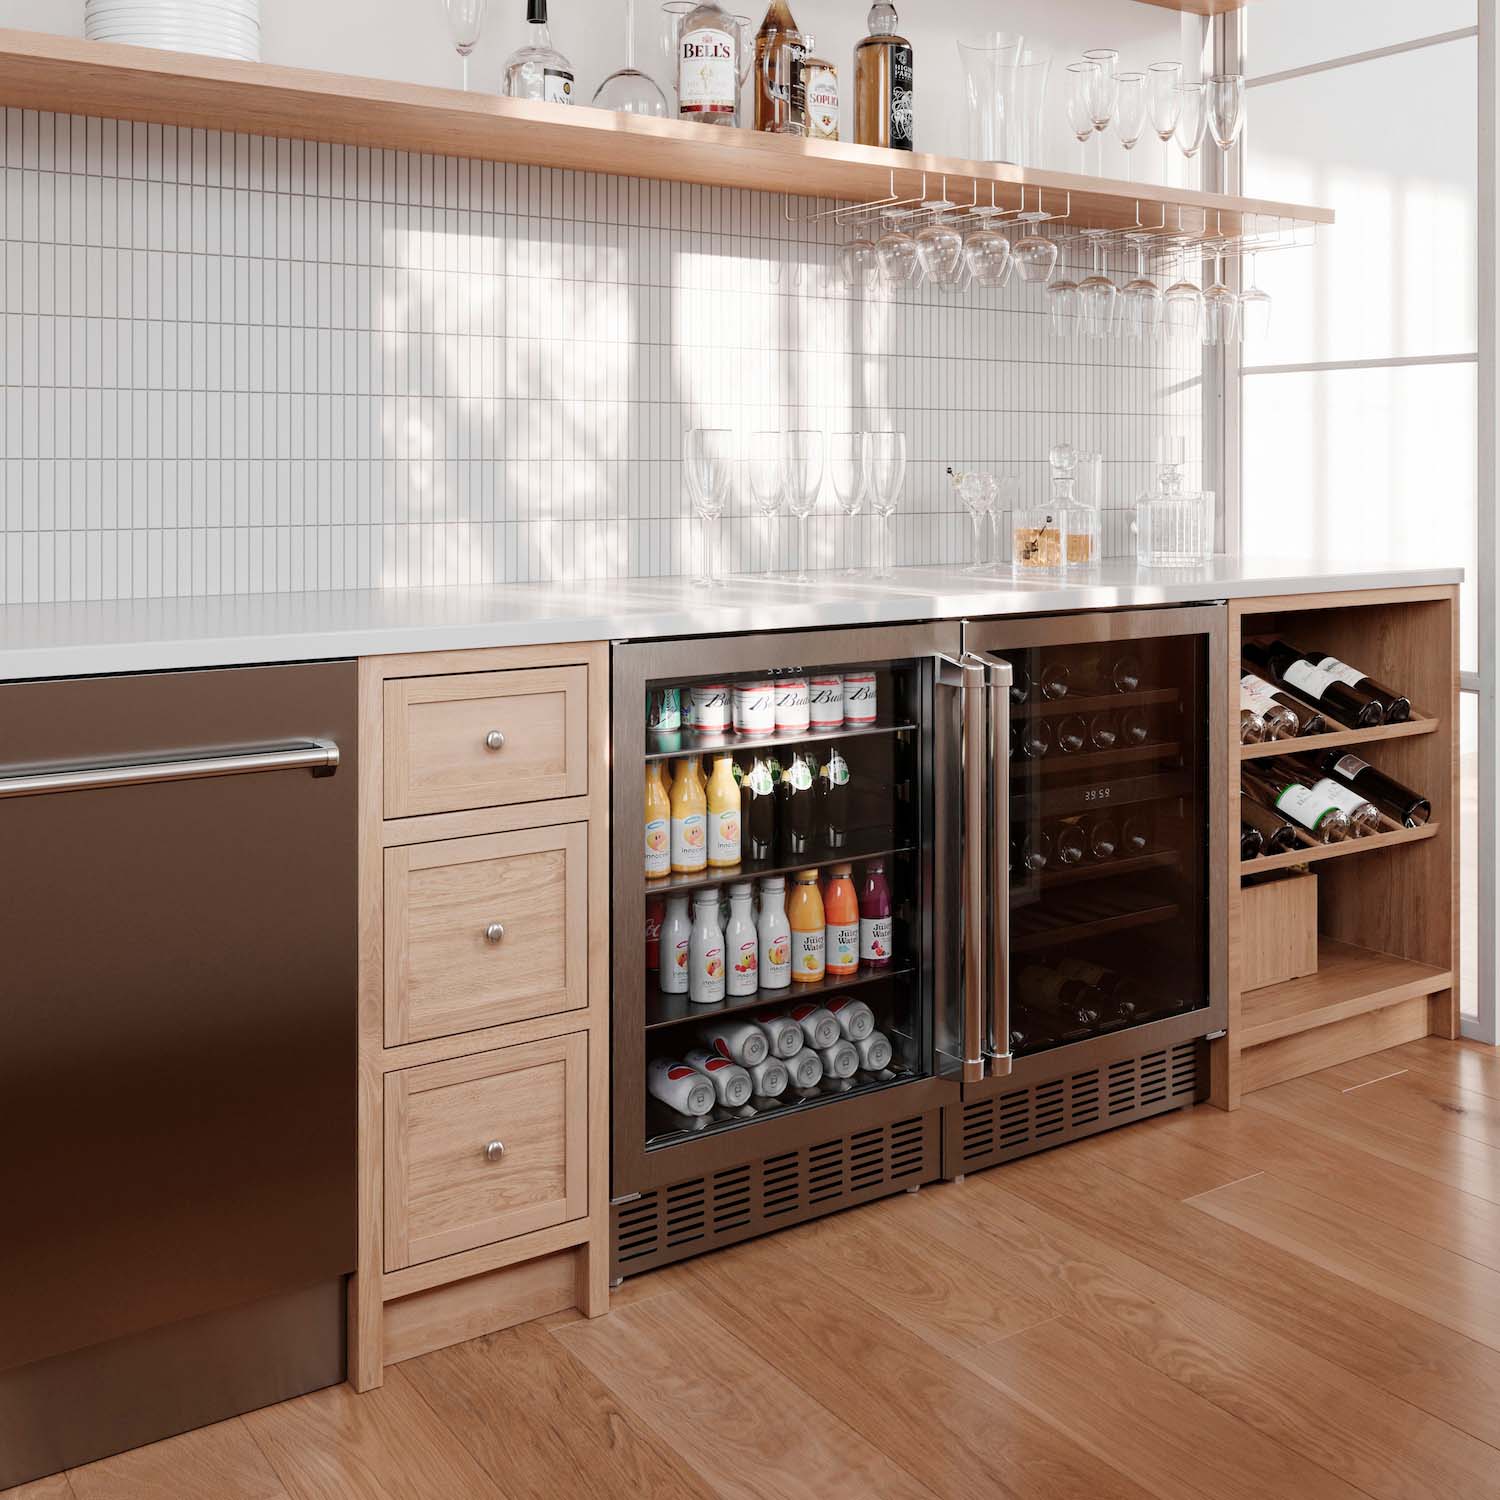 ZLINE wine cooler and beverage center built-in to wood cabinets.